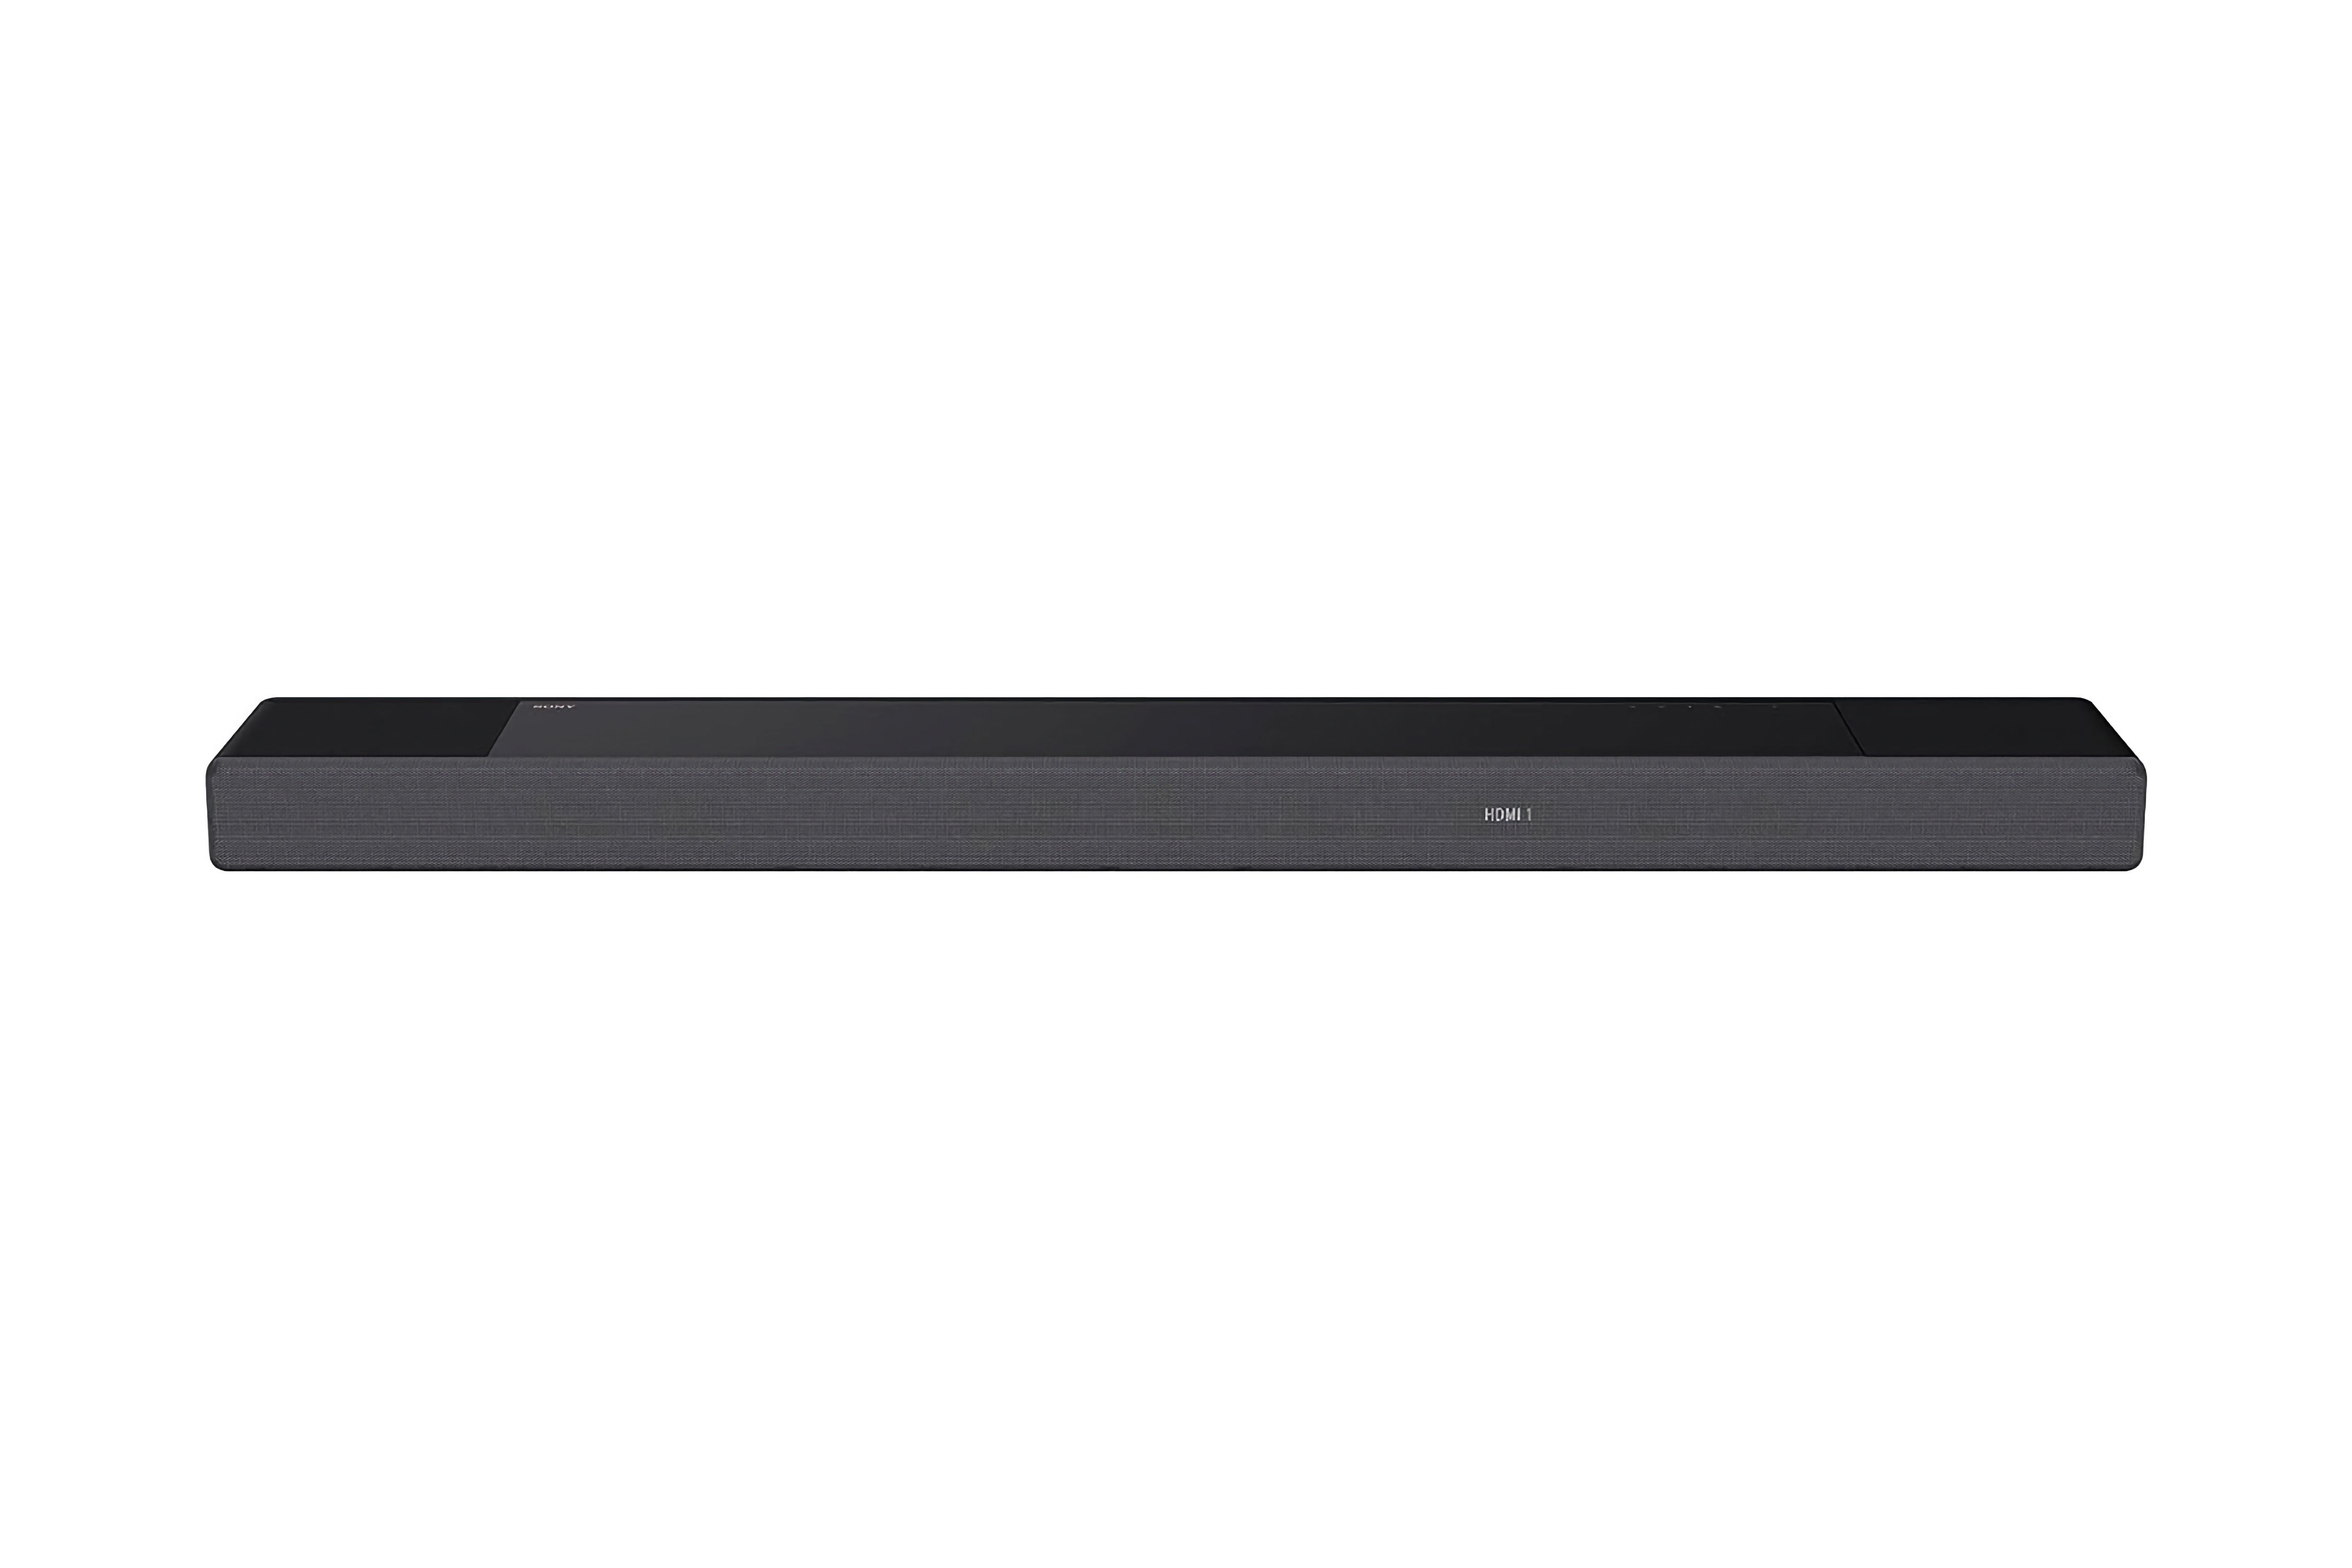 A black and gray Sony soundbar.